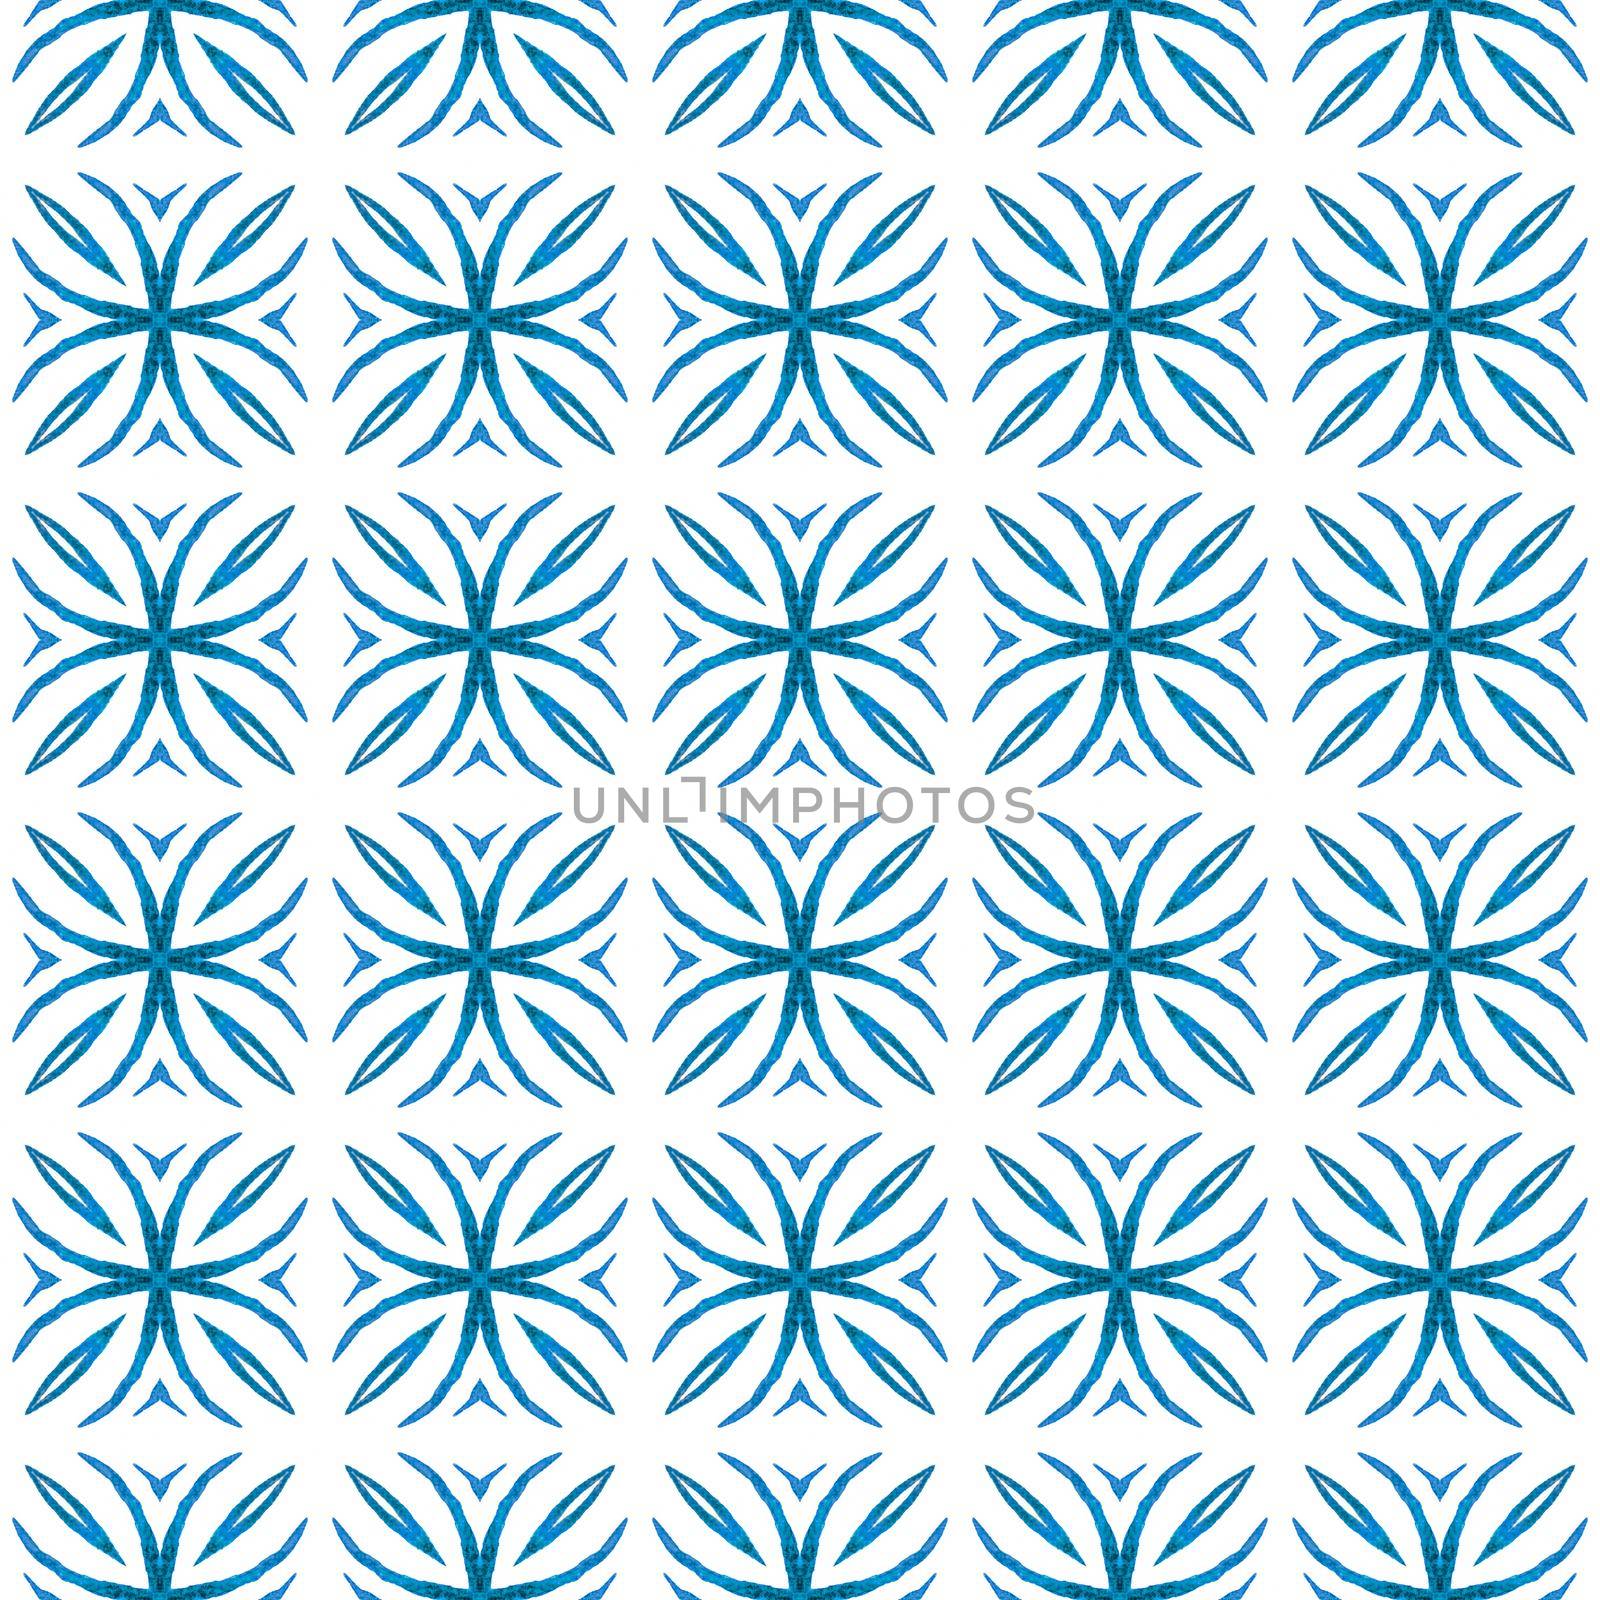 Medallion seamless pattern. Blue interesting boho chic summer design. Textile ready breathtaking print, swimwear fabric, wallpaper, wrapping. Watercolor medallion seamless border.